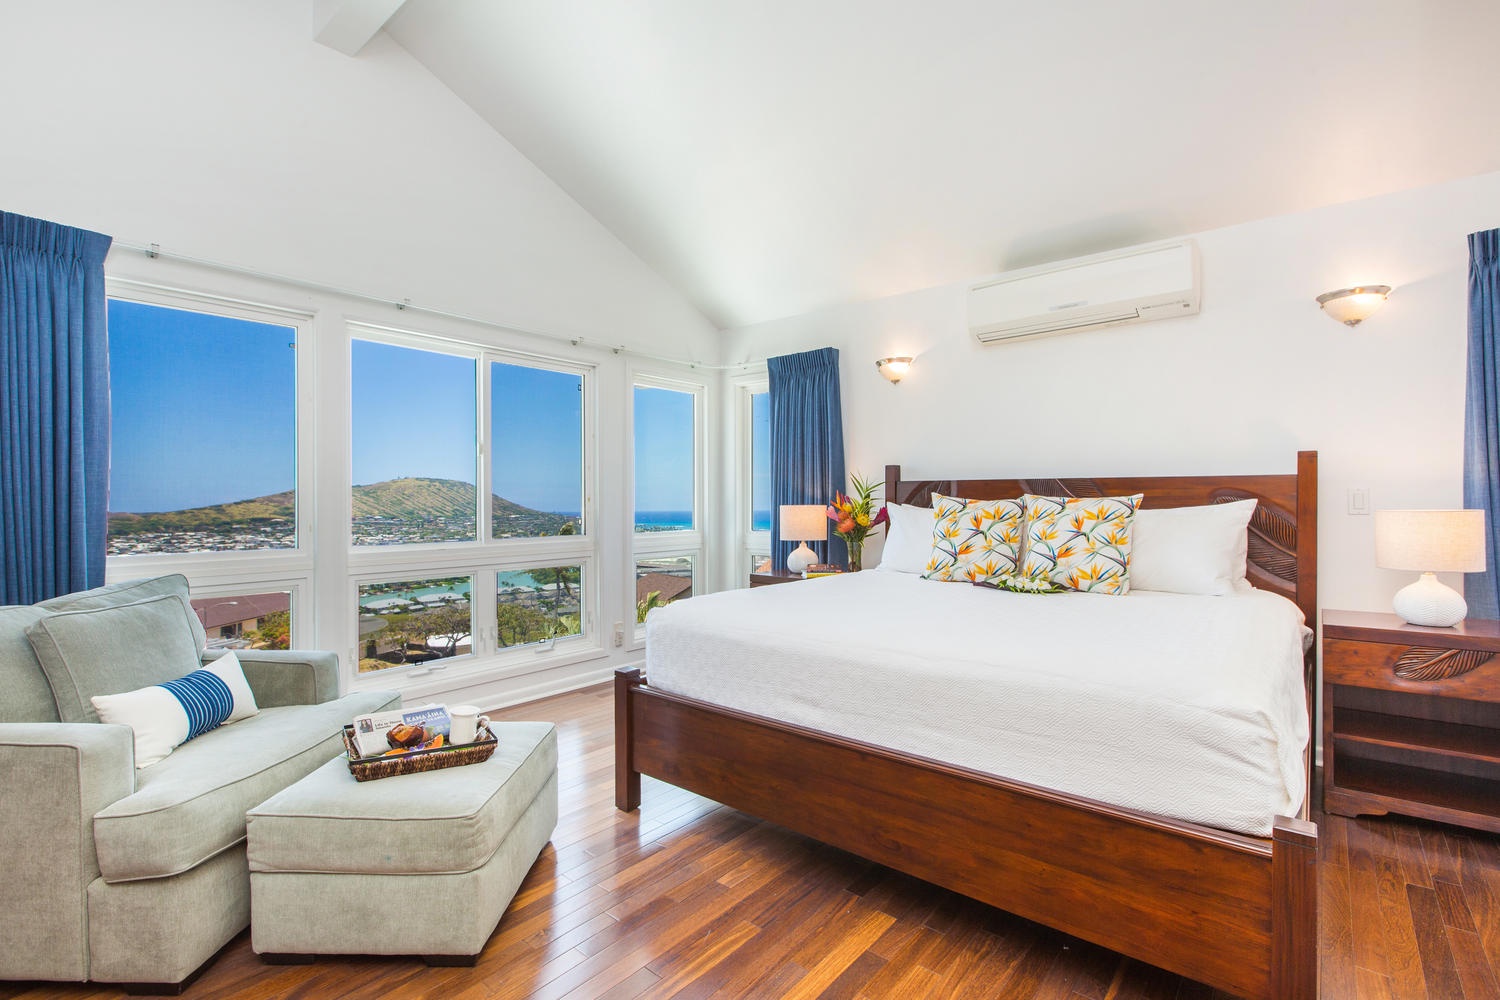 Honolulu Vacation Rentals, Makani Lani - Upstairs primary bedroom, overlooking Koko Crater, the Pacific and the marina.